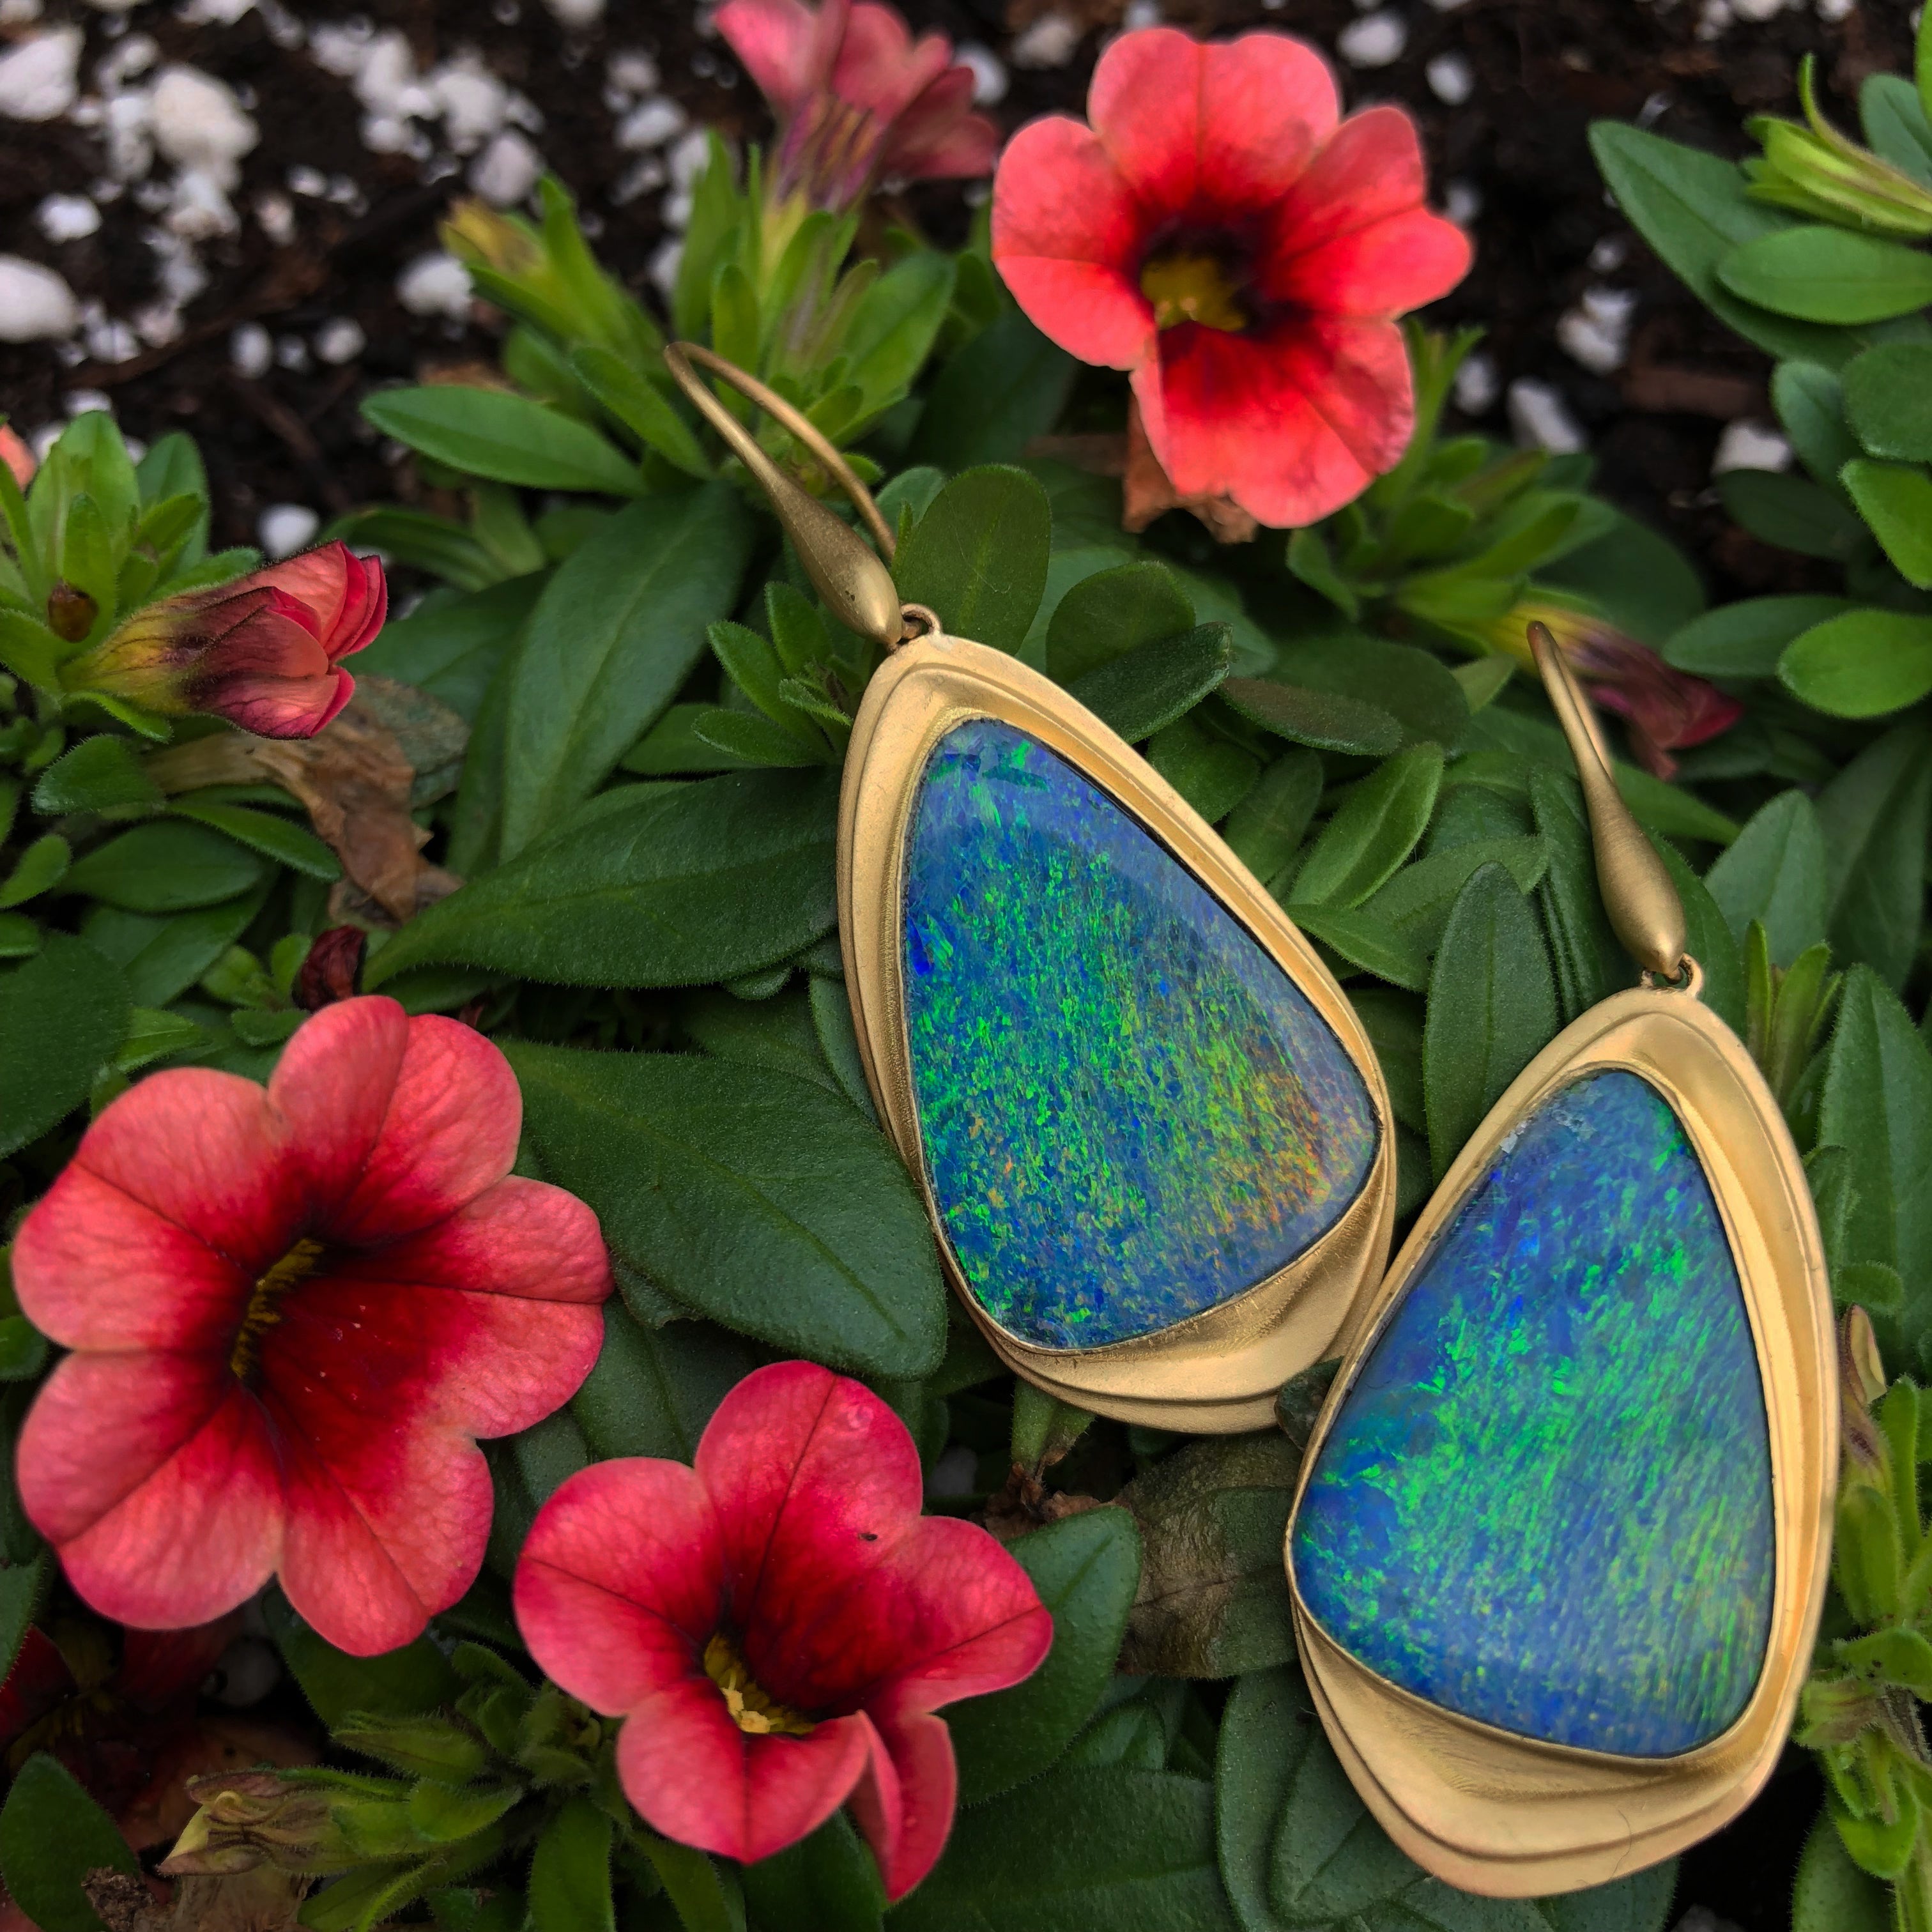 Azores Triangle Opal Earrings